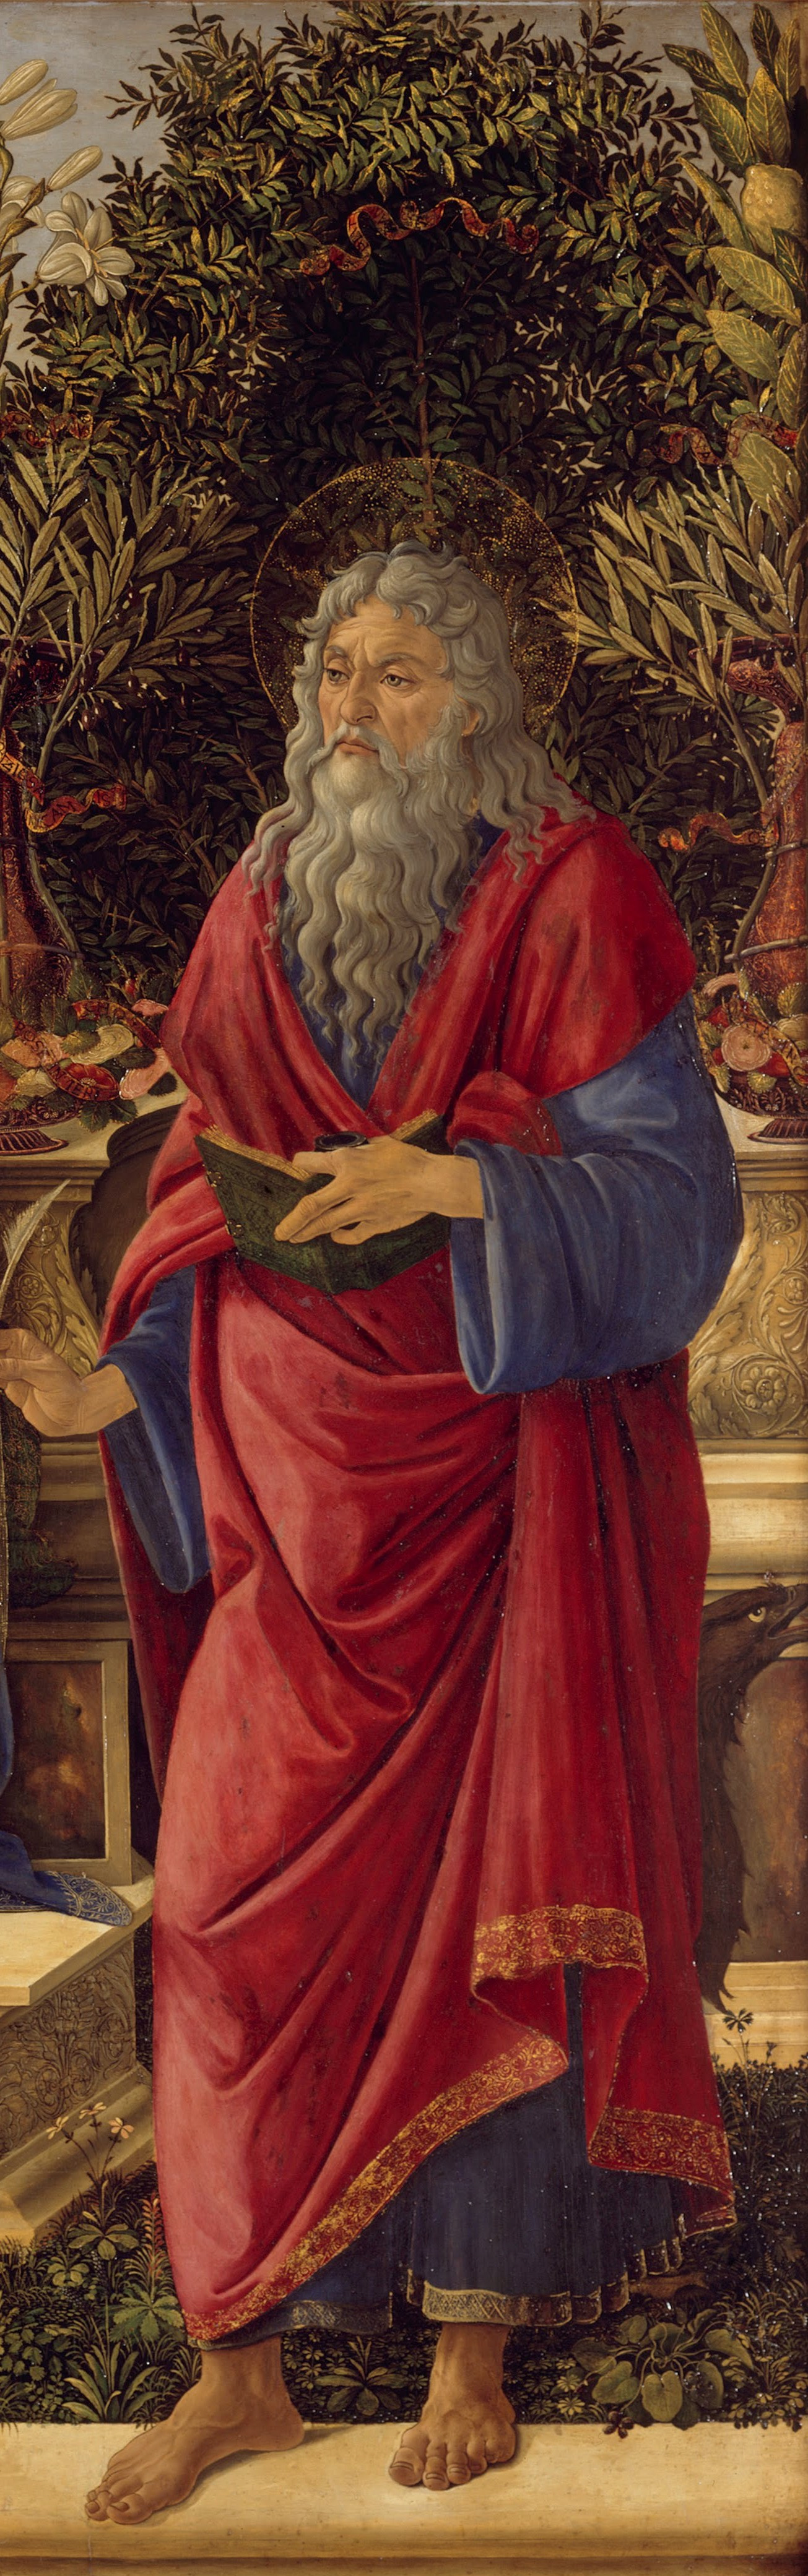 Sandro Botticelli. The Bardi altarpiece (detail)